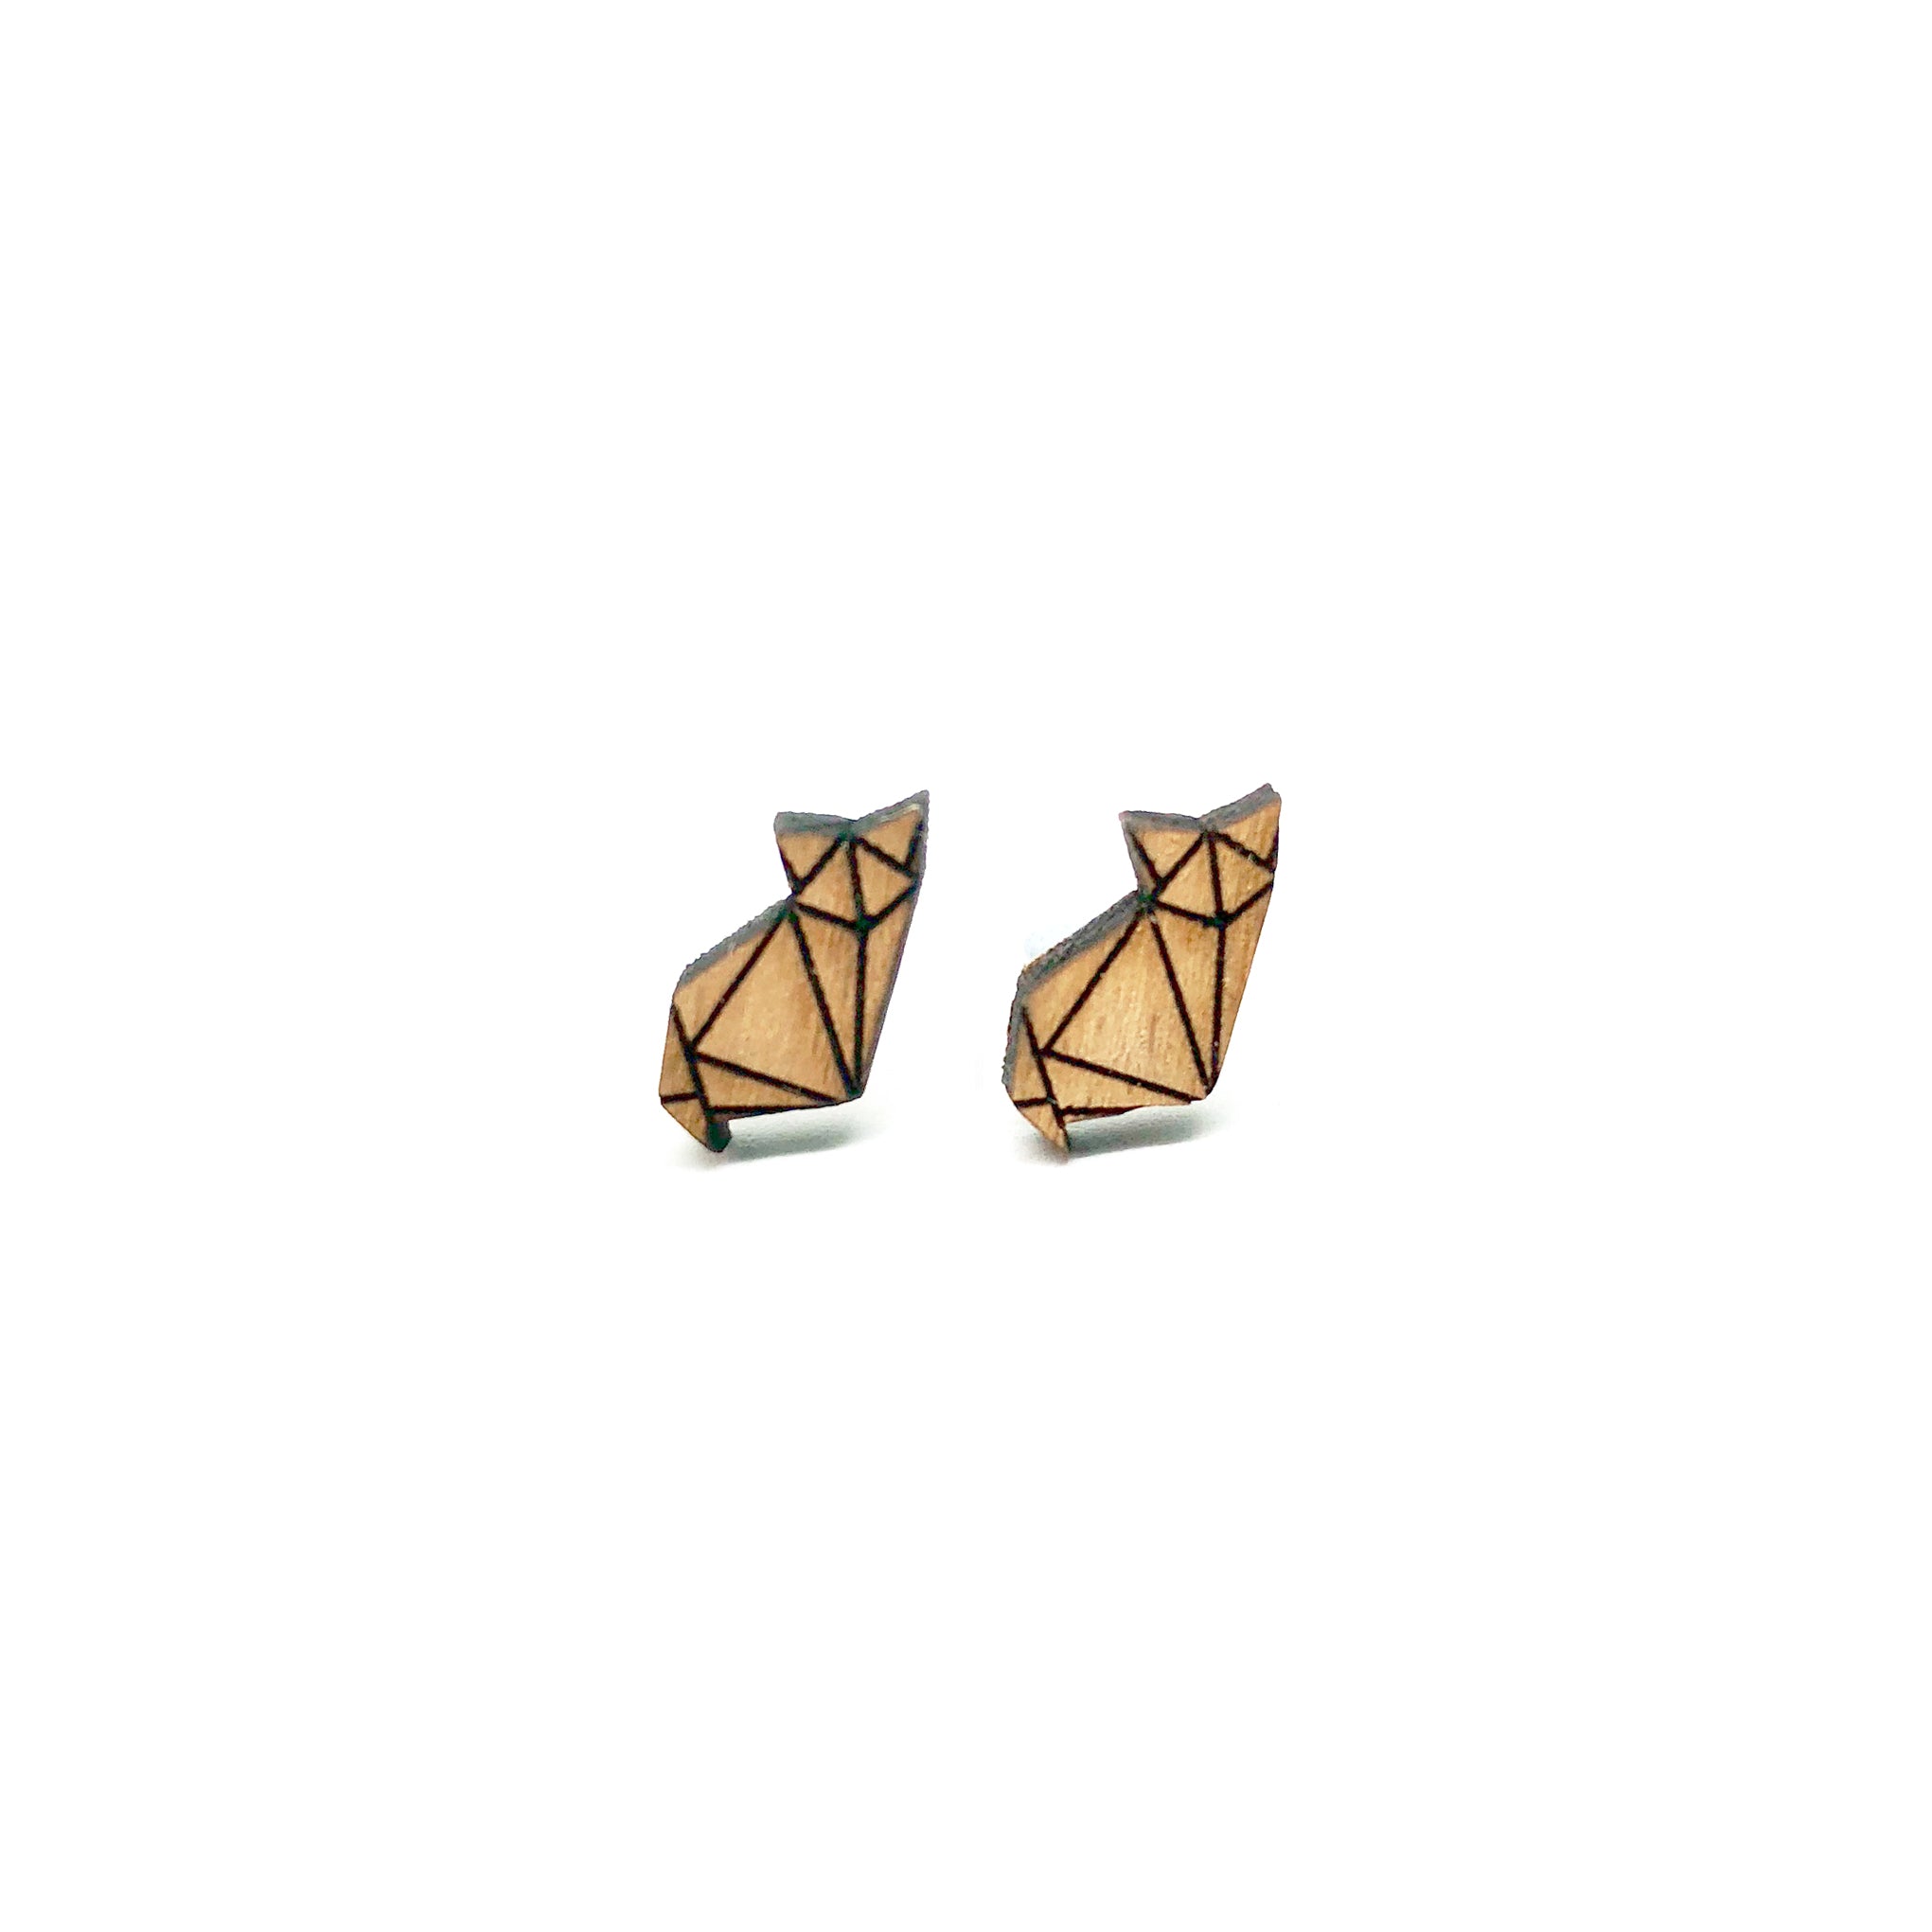 Origami Paper Fox Laser Cut Wood Earrings - LM